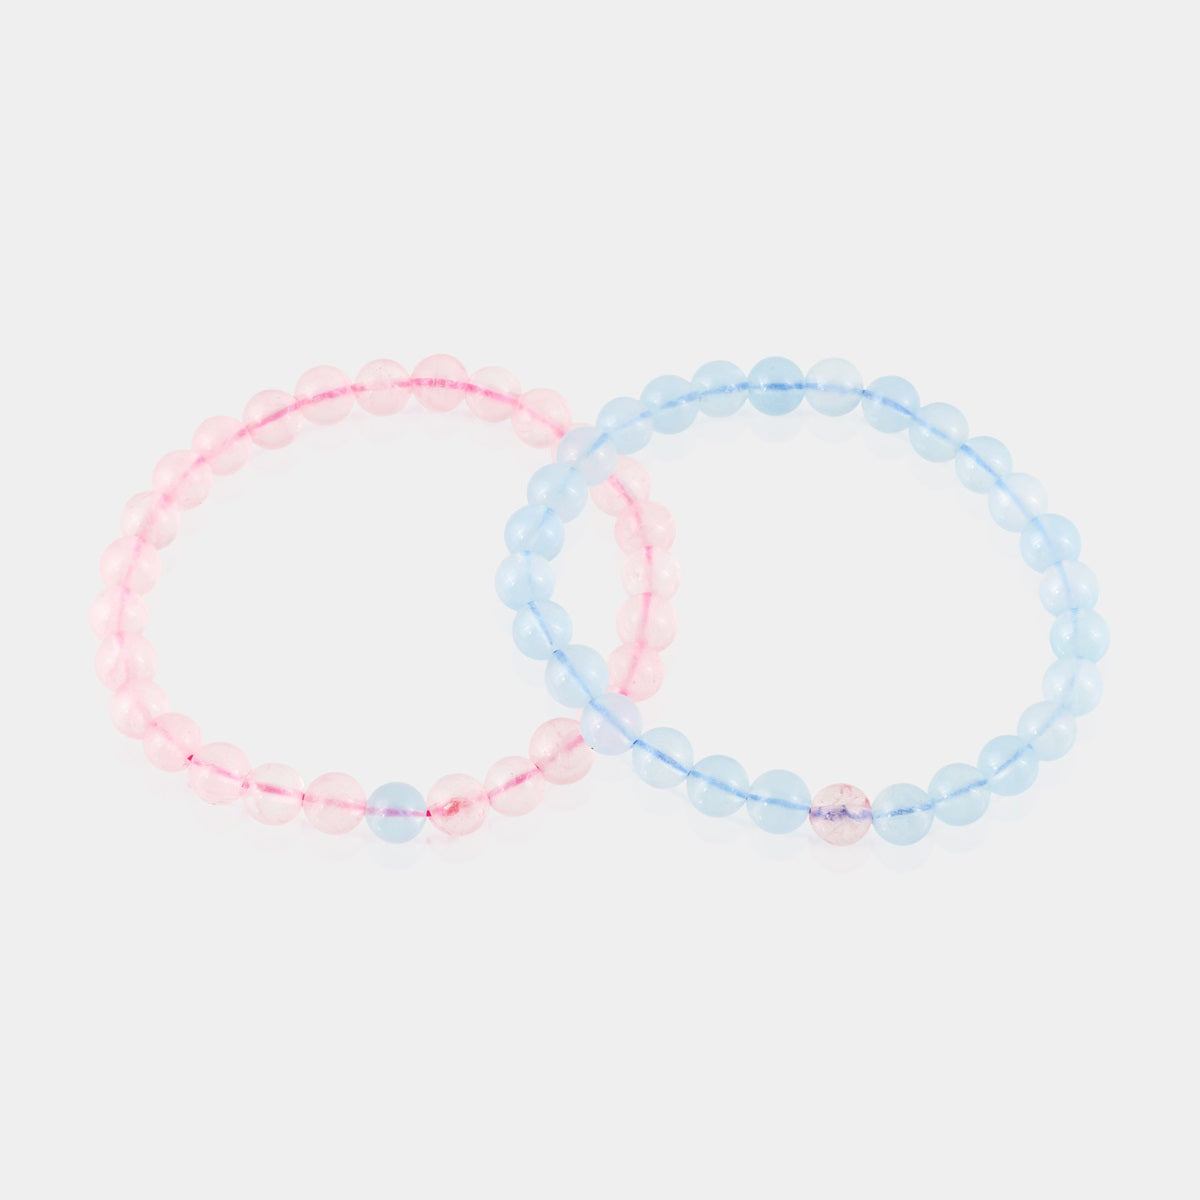 Symbolic representation of love and harmony through a couple's bracelet adorned with Aquamarine and Rose Quartz gemstones